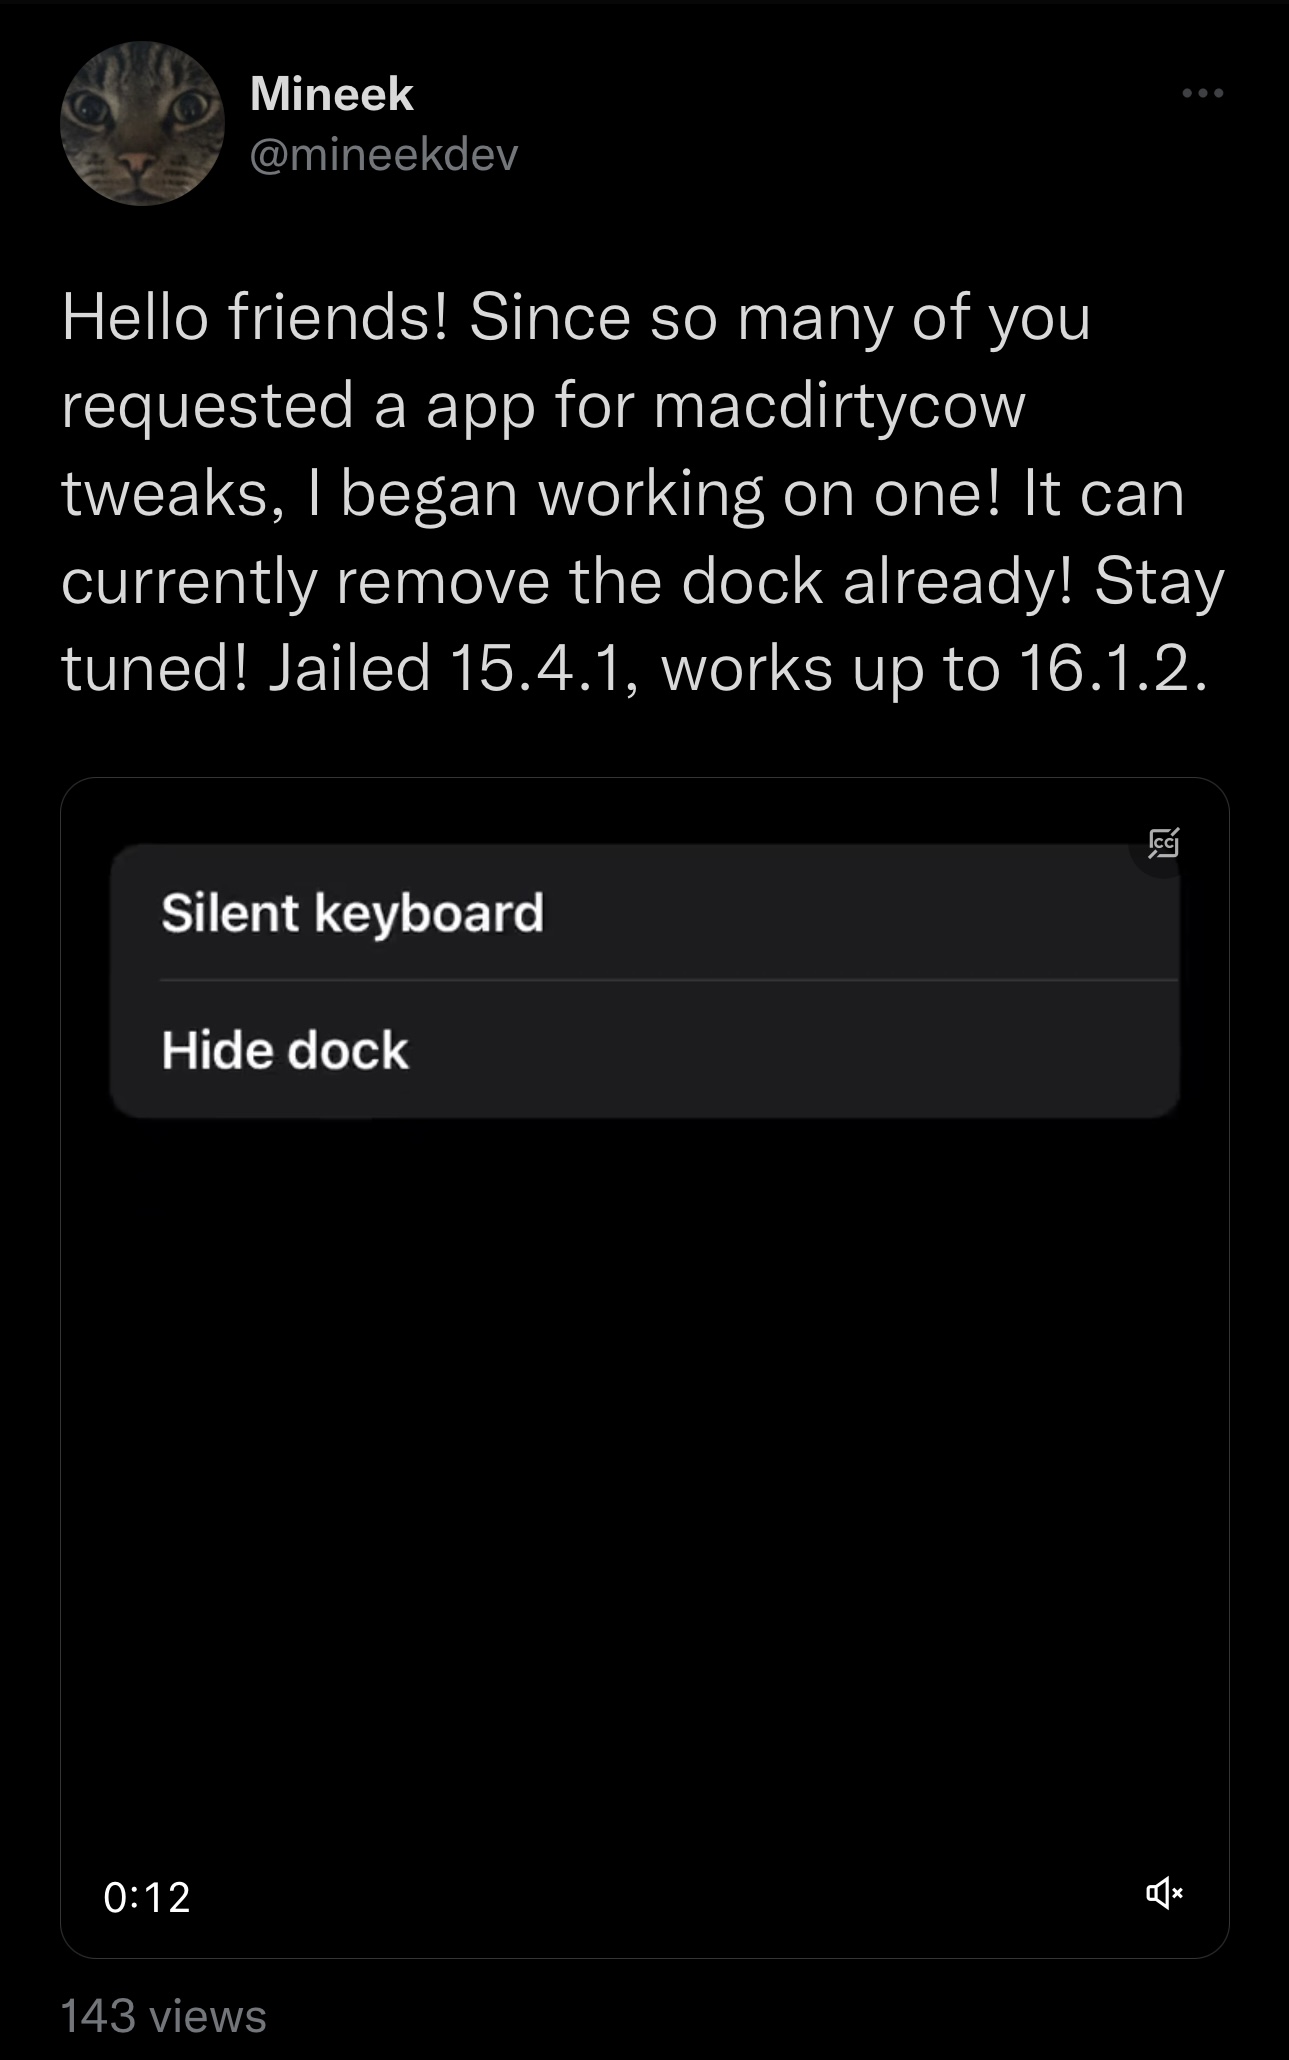 Mineek teases upcoming MacDirtyCow bug app for iPhone.